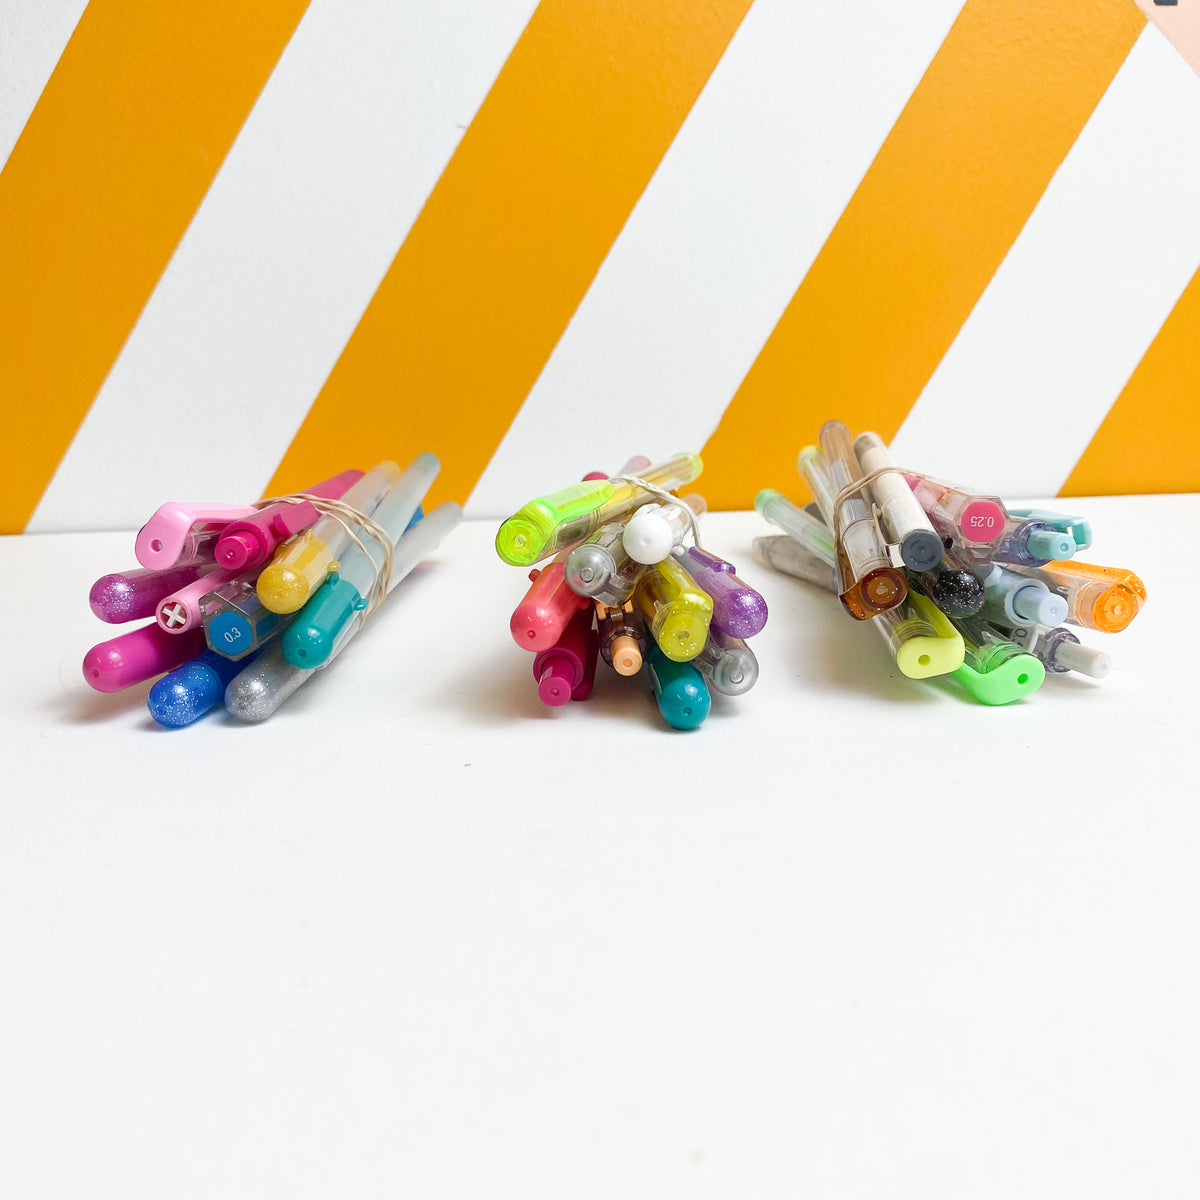 Amazing Color Changing Pens - 20 Pieces per Set - KidsBaron